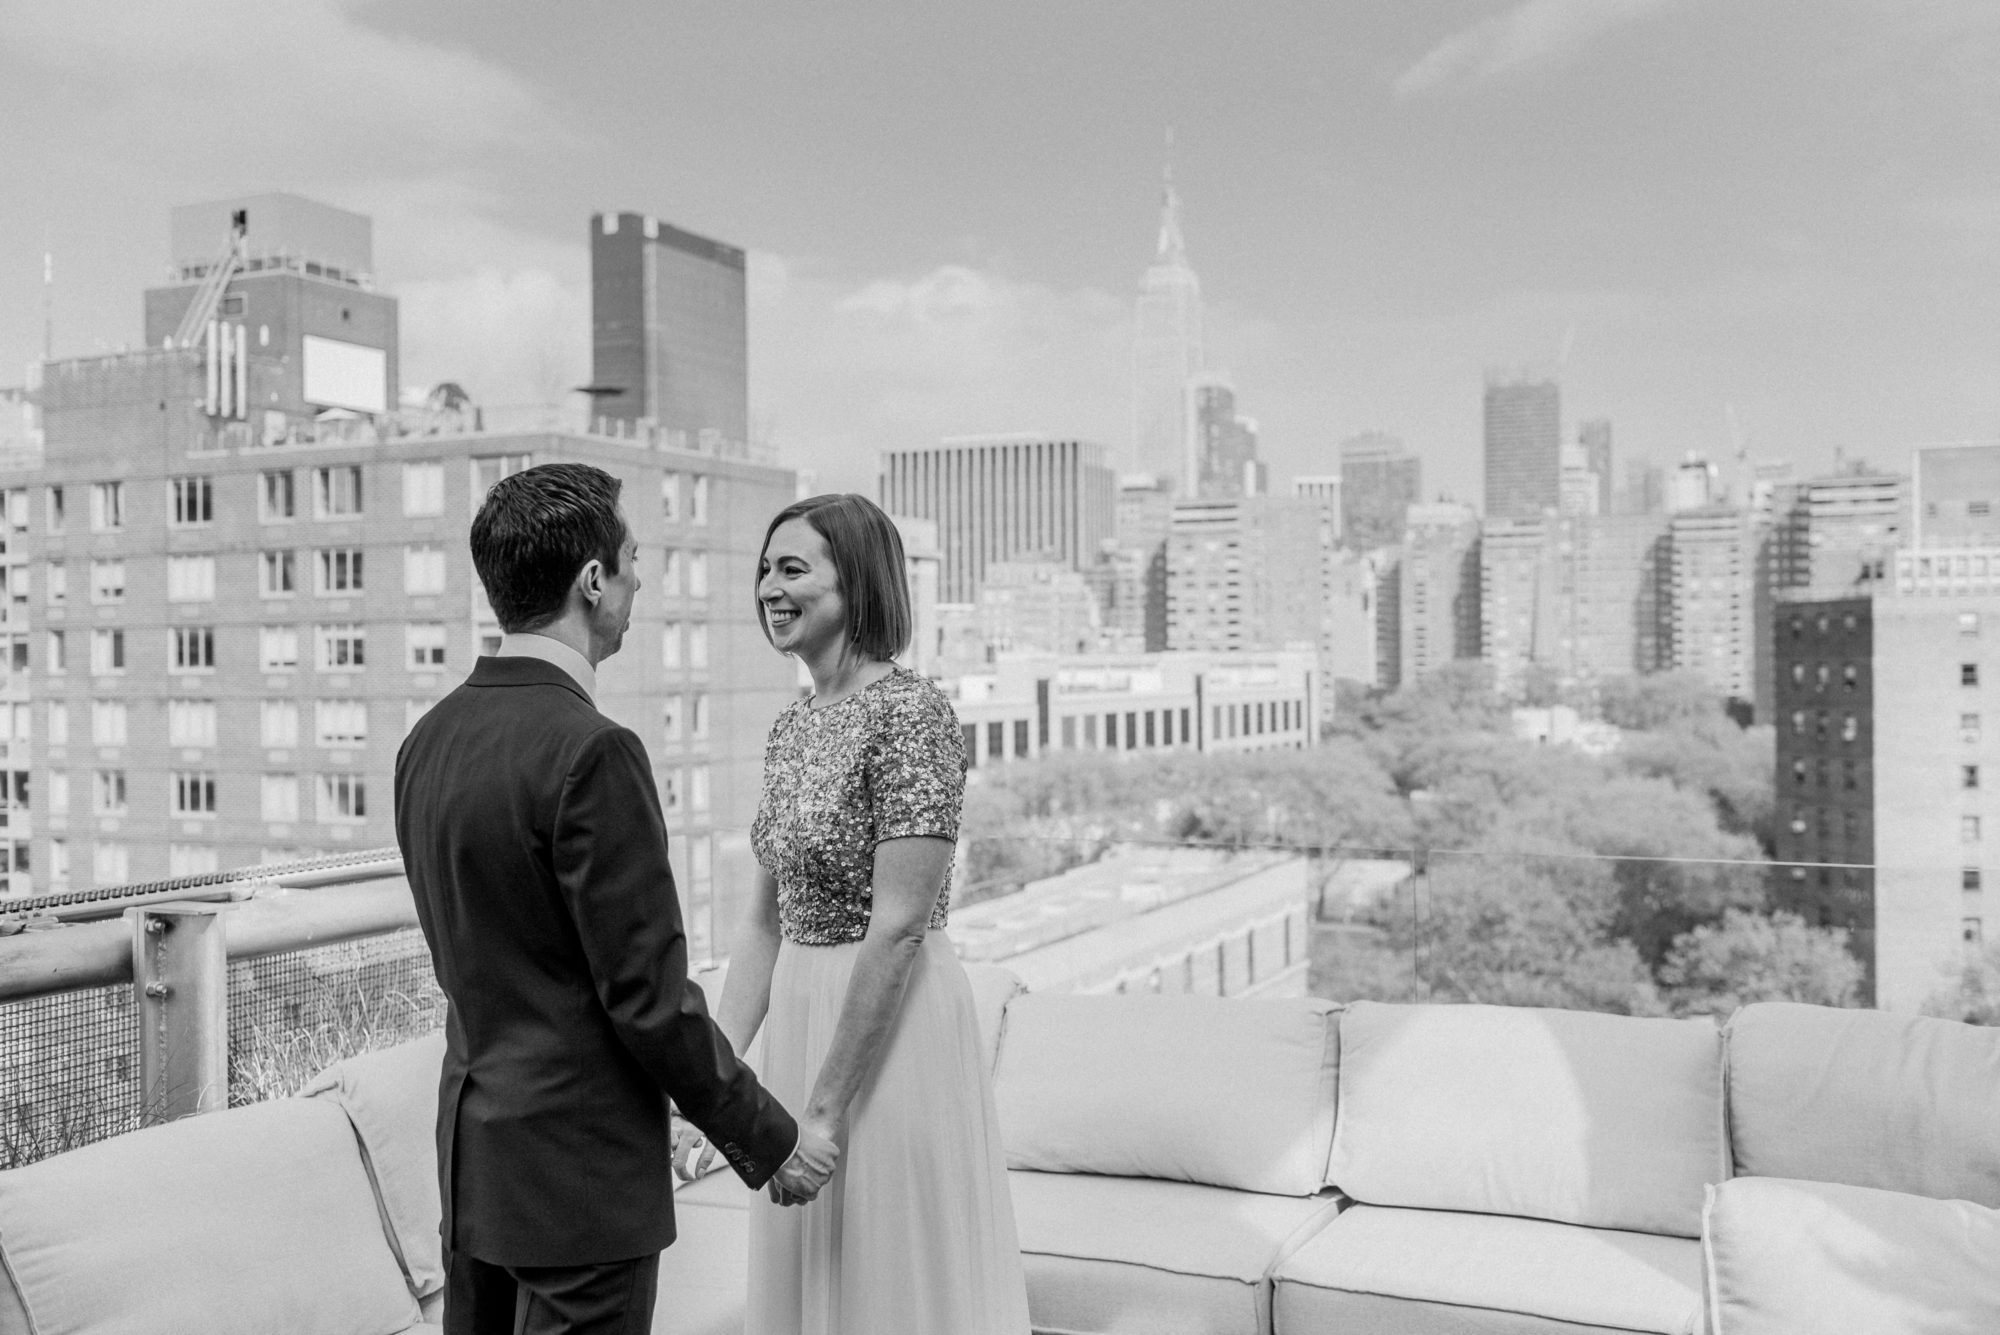 Spring NYC City Hall Wedding